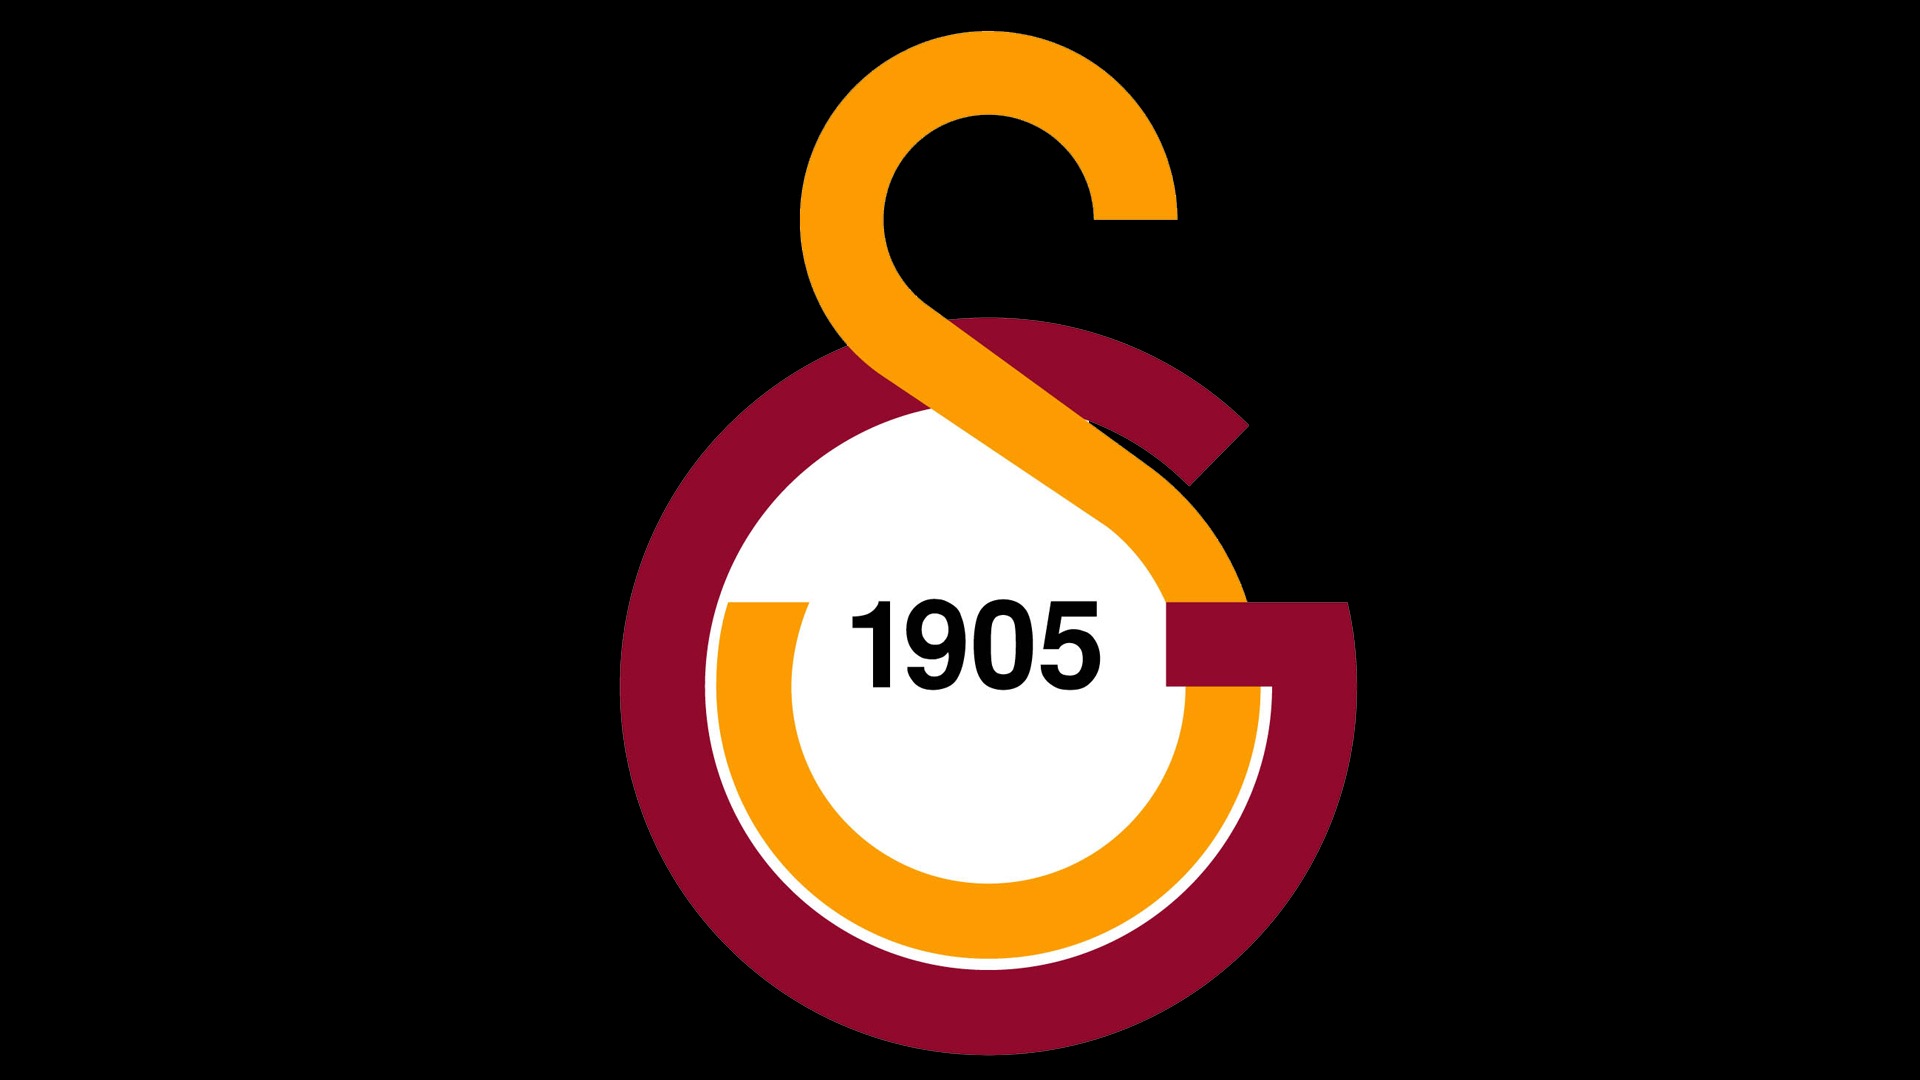 Galatasaray logo histoire et signification, evolution, symbole Galatasaray